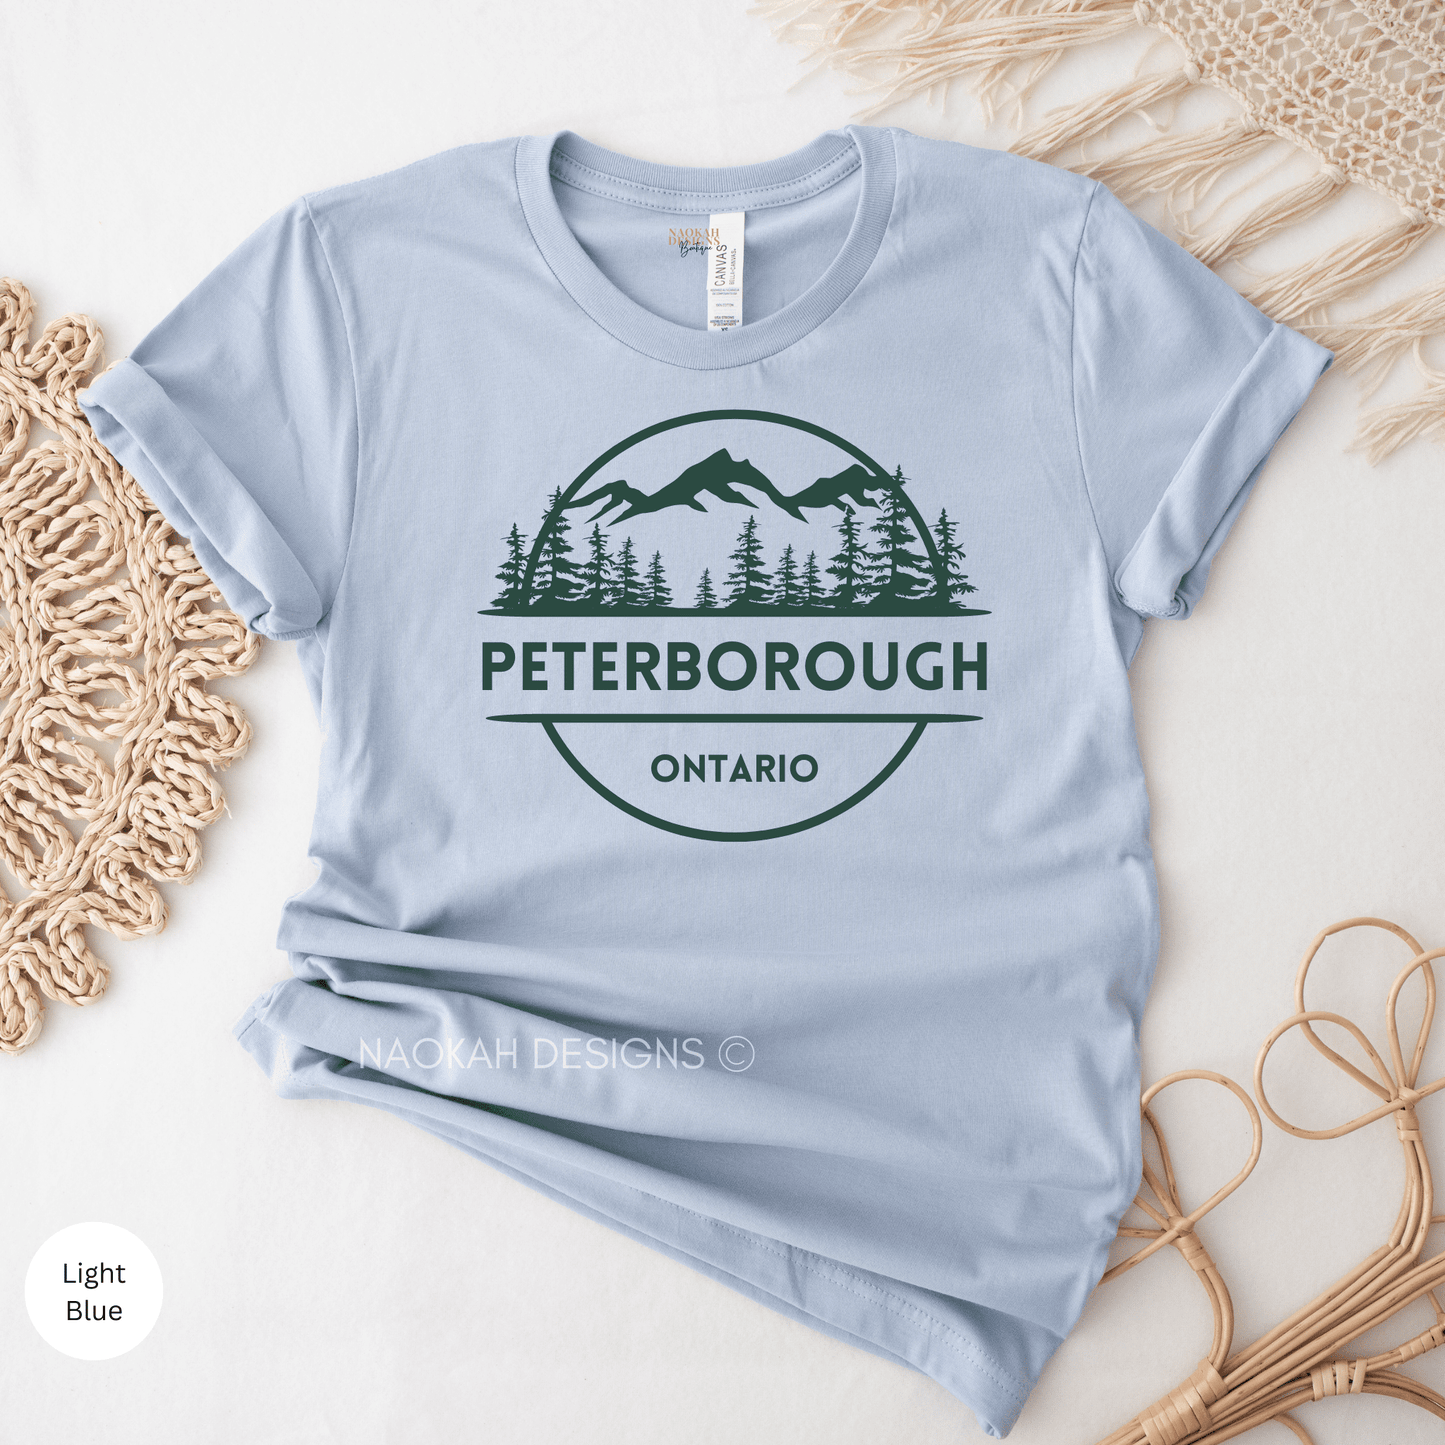 peterborough Ontario shirt, Kawartha's shirt, Ontario shirt, Peterborough shirt, Kawartha lakes, trent, nature shirt, outdoor shirt, landscape shirt, cottage country shirt